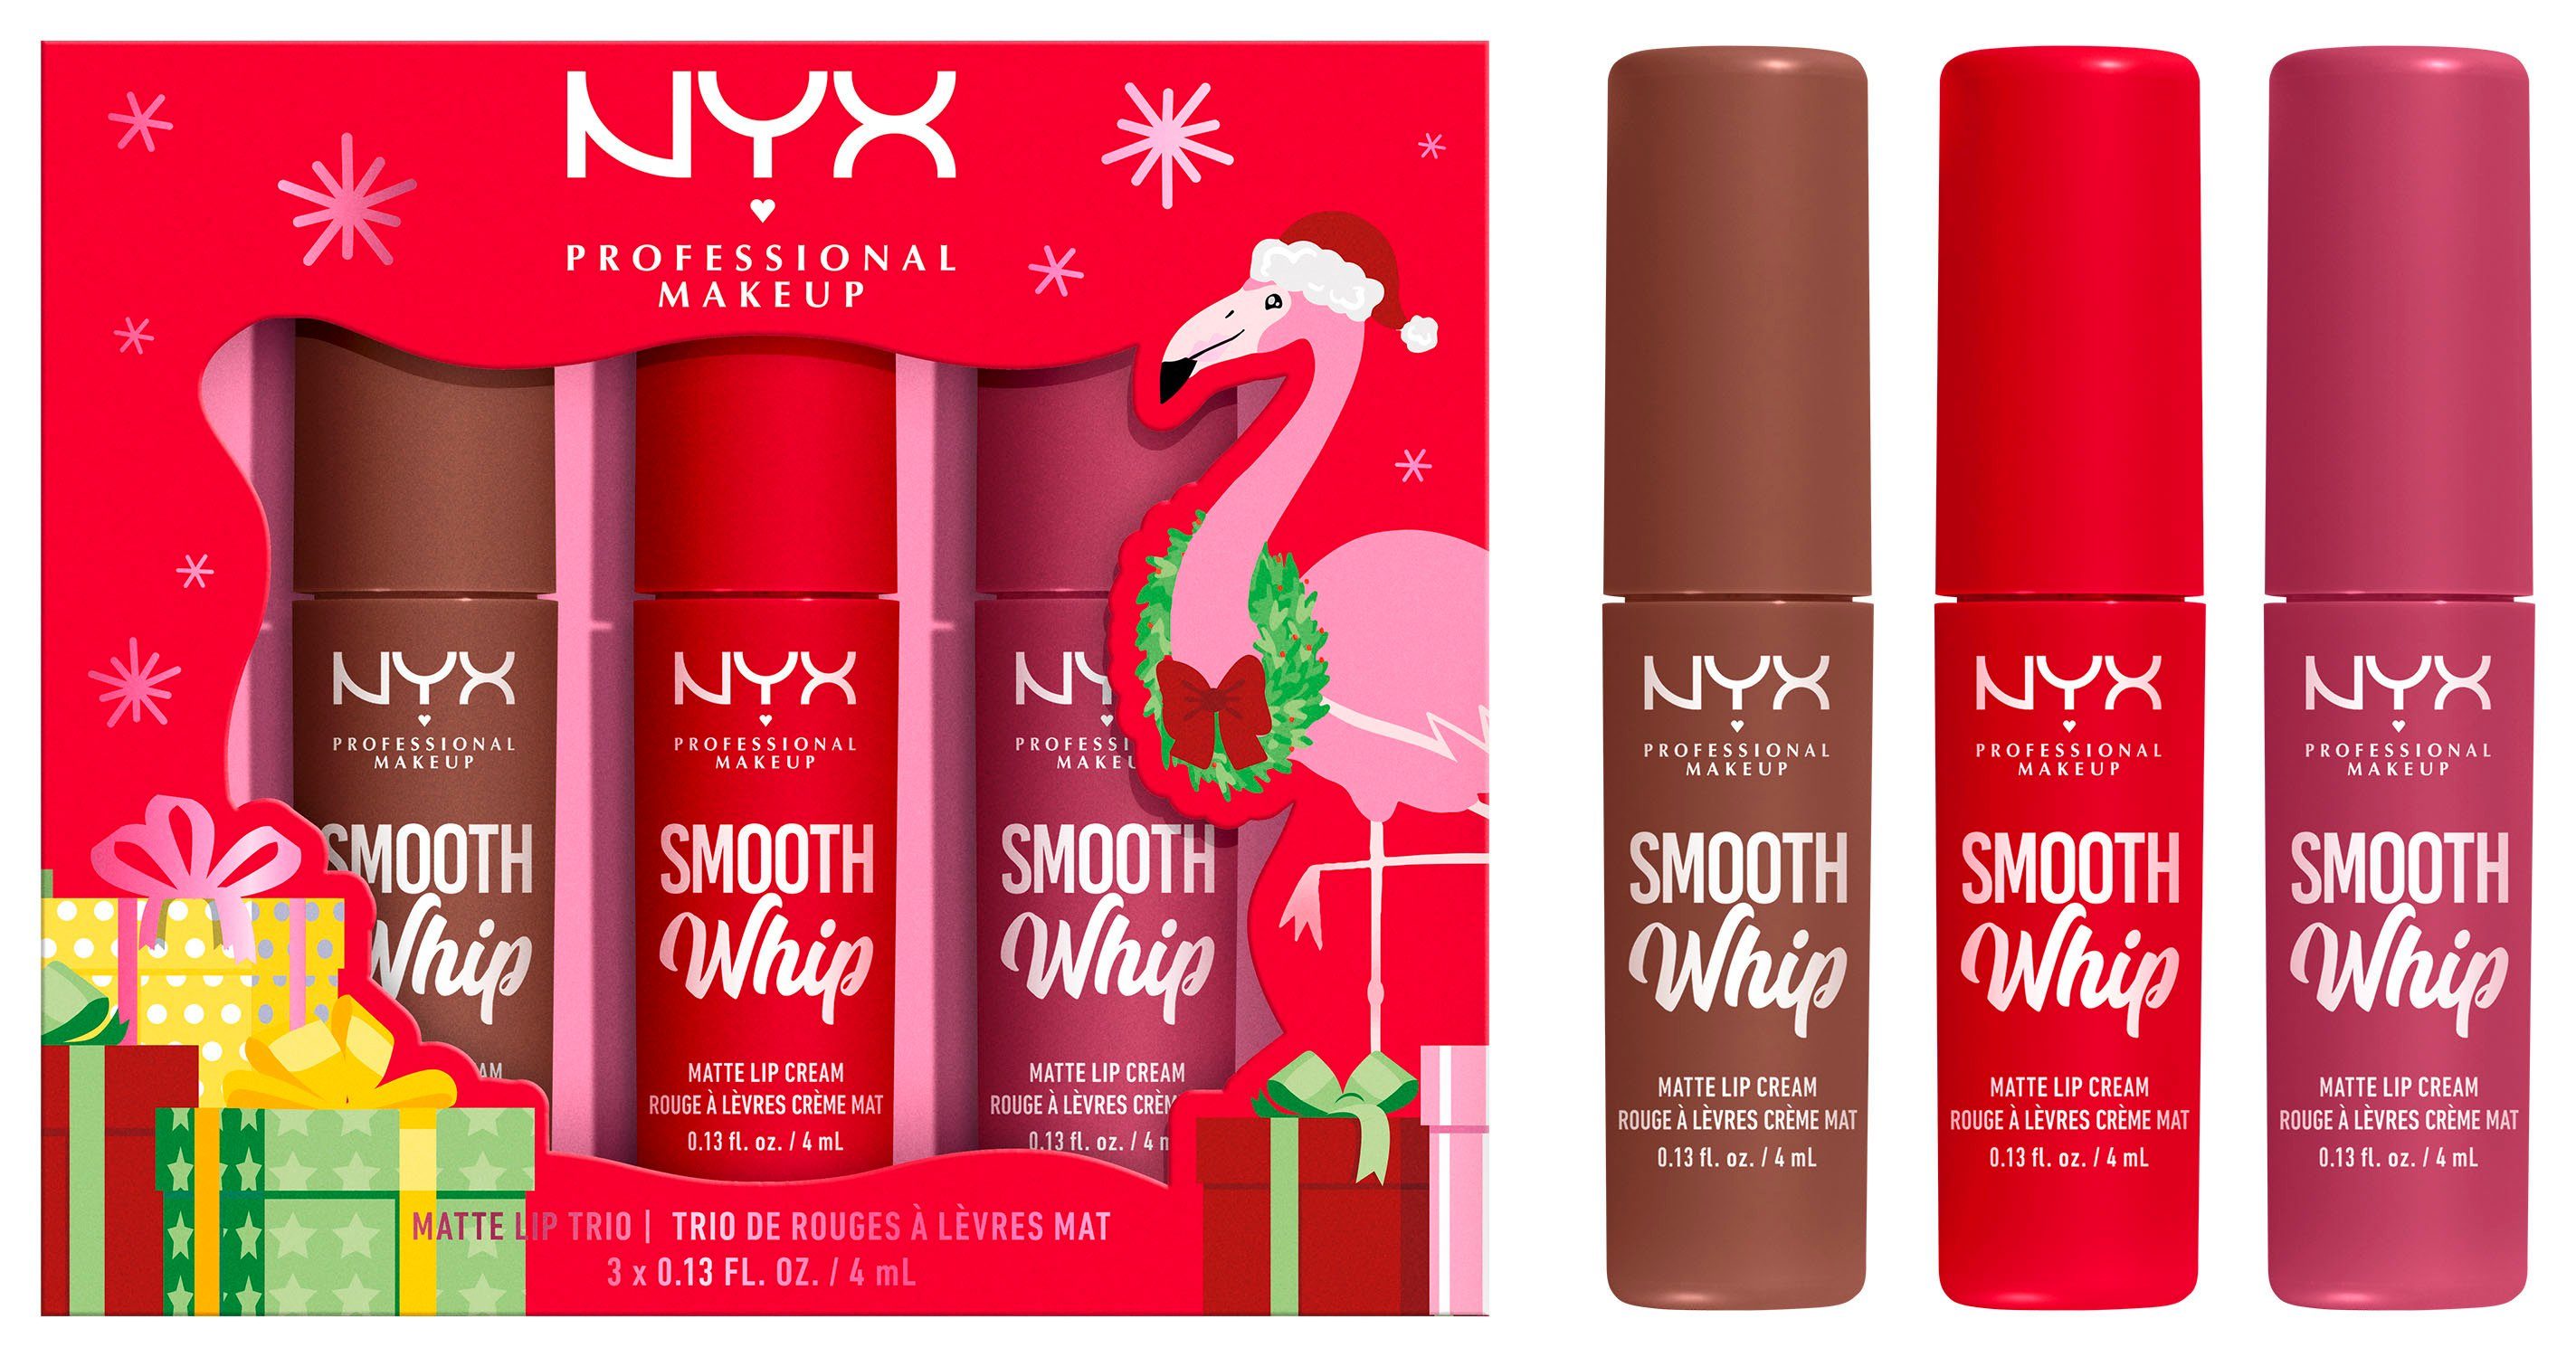 NYX Schmink-Set NYX Whip Trio Professional Makeup Smooth